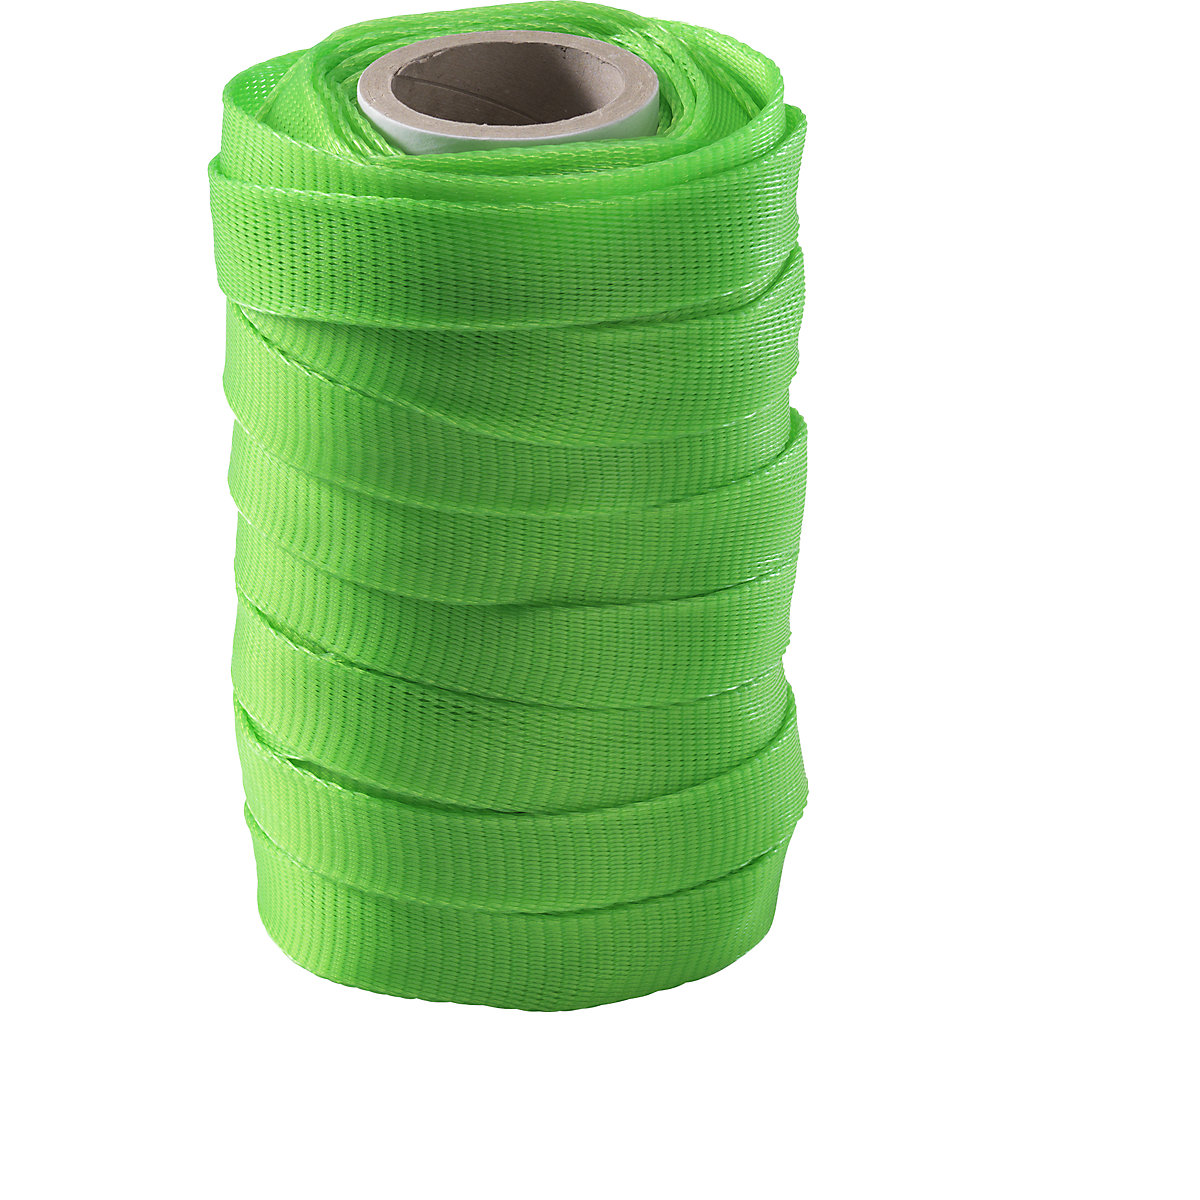 Surface protection net, polyethylene, 1 roll, light green, for Ø 40 – 75 mm